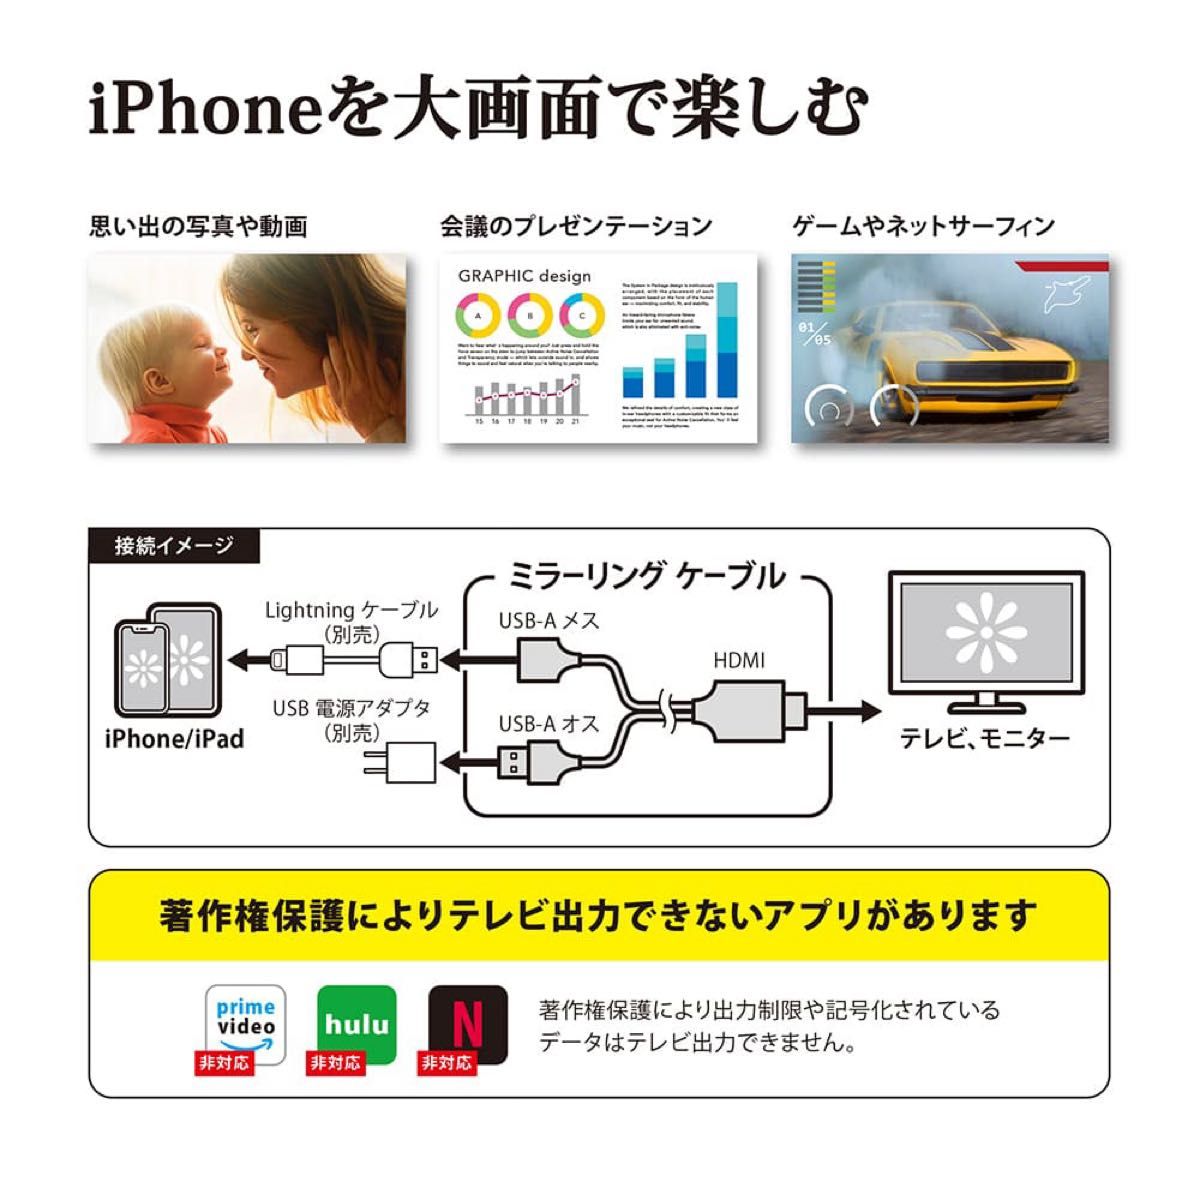 Premium Style iPhone/iPad用 HDMIミラーリングケーブル ホワイト